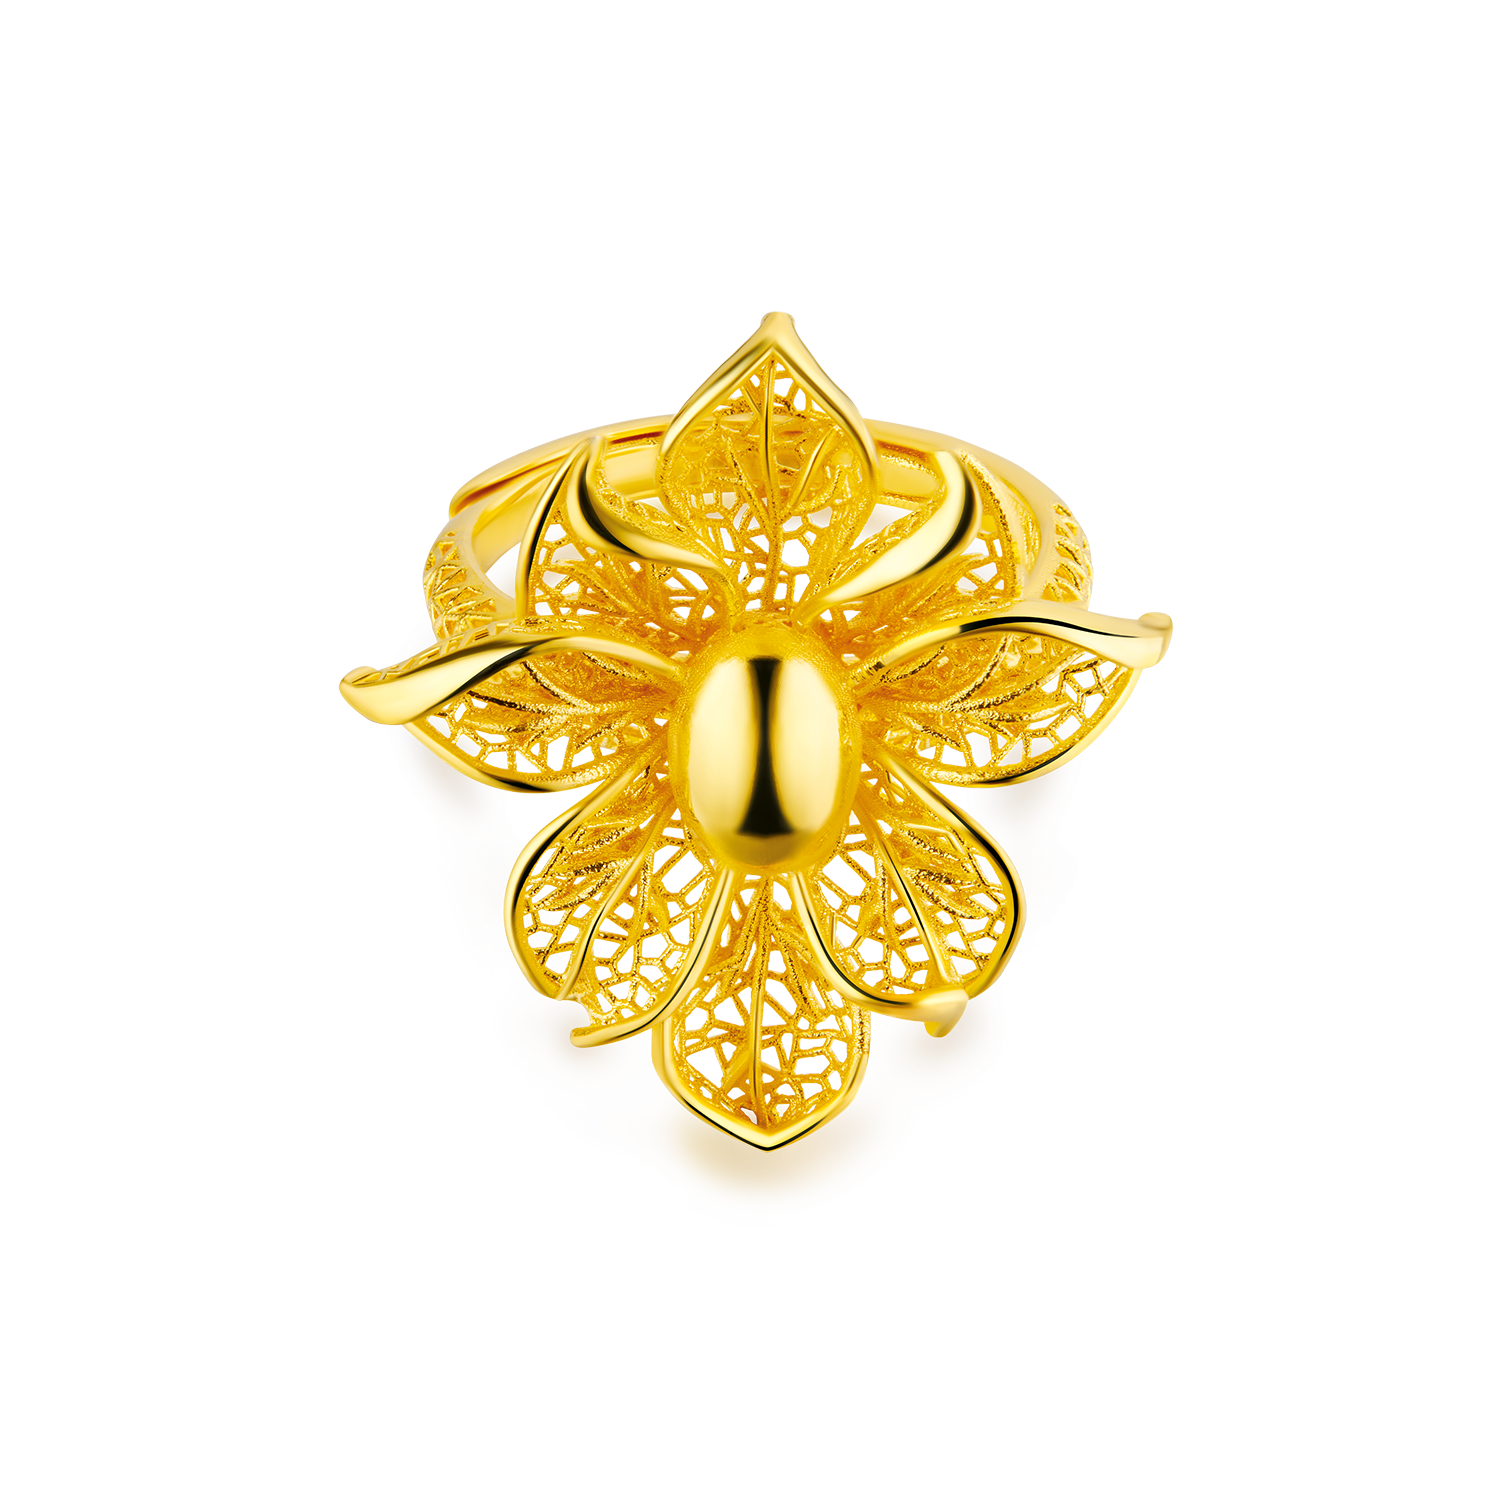 Beloved Collection "Blissful Laurel" Gold Ring